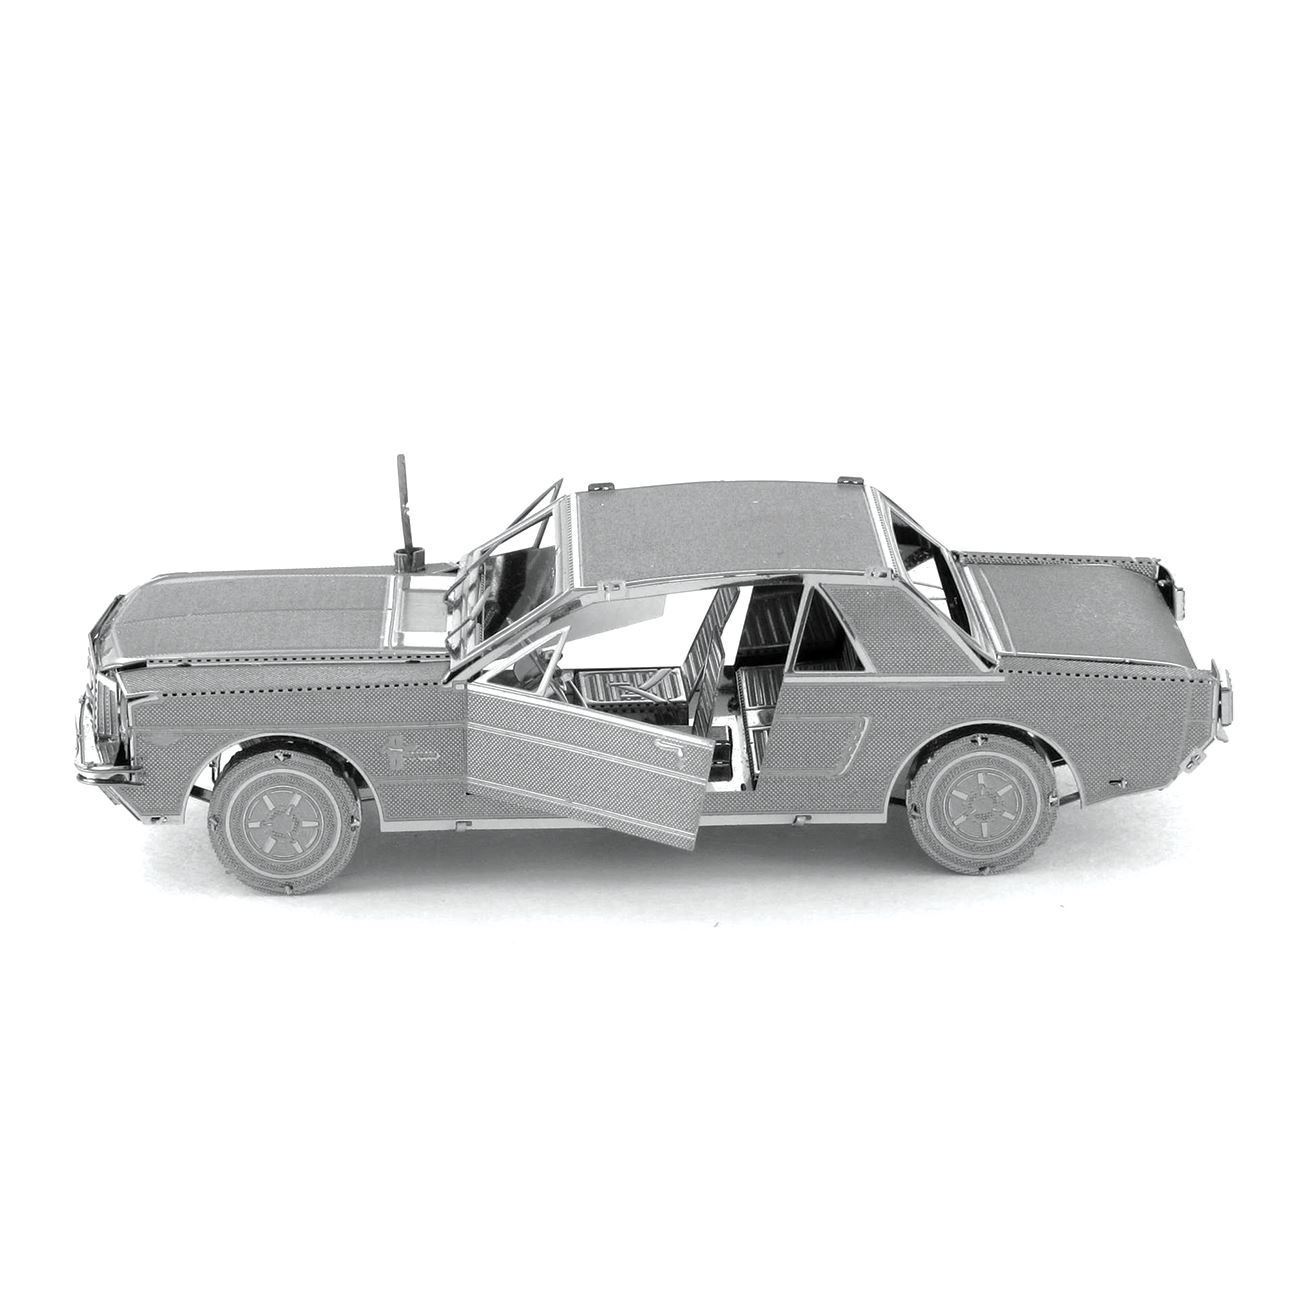 Metal Earth 1965 Ford Mustang SILVER 3D Laser Cut Metal DIY Model Build Kit 